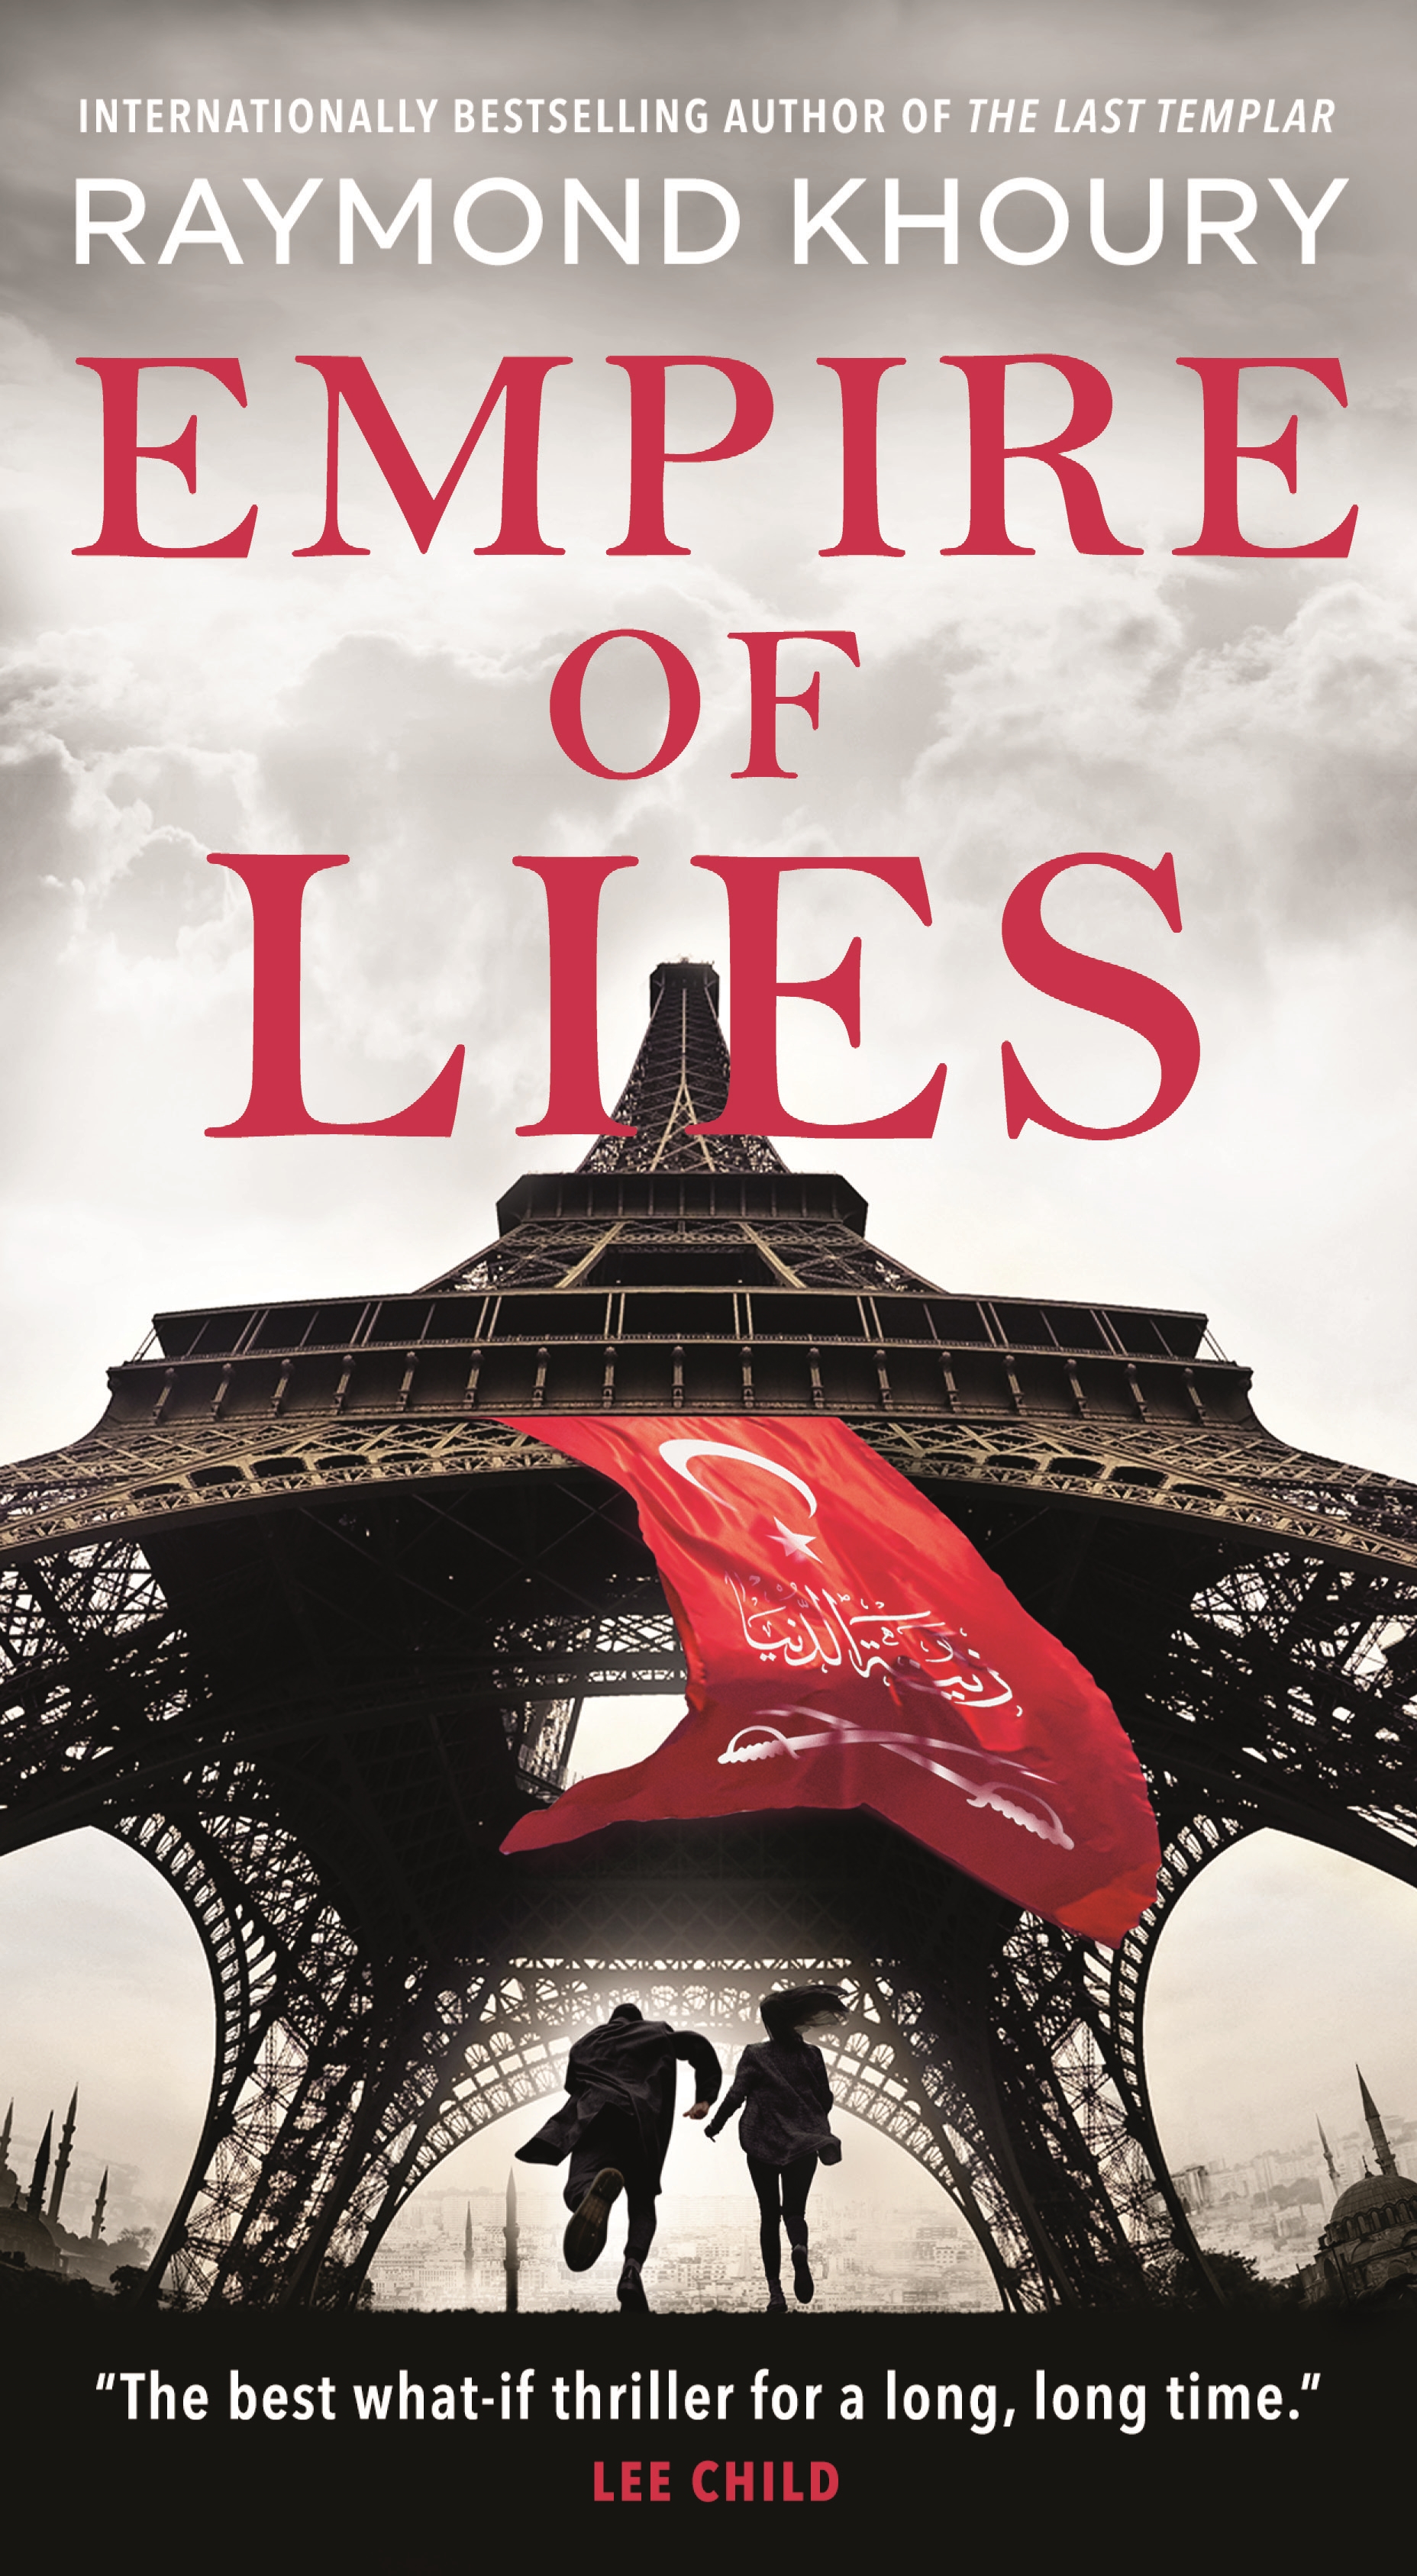 Empire of Lies by Raymond Khoury